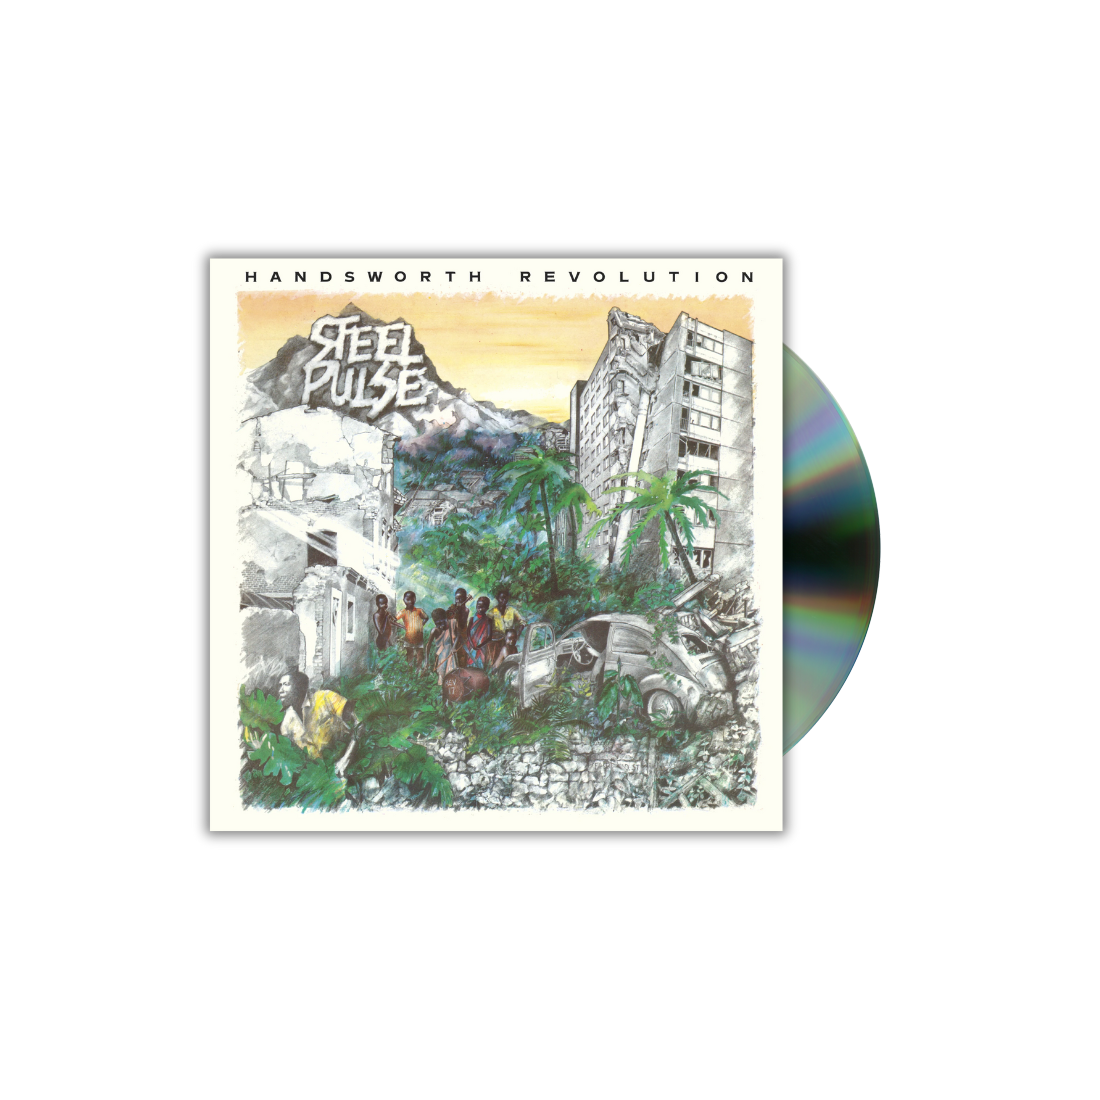 Steel Pulse - Handsworth Revolution: Deluxe Edition CD